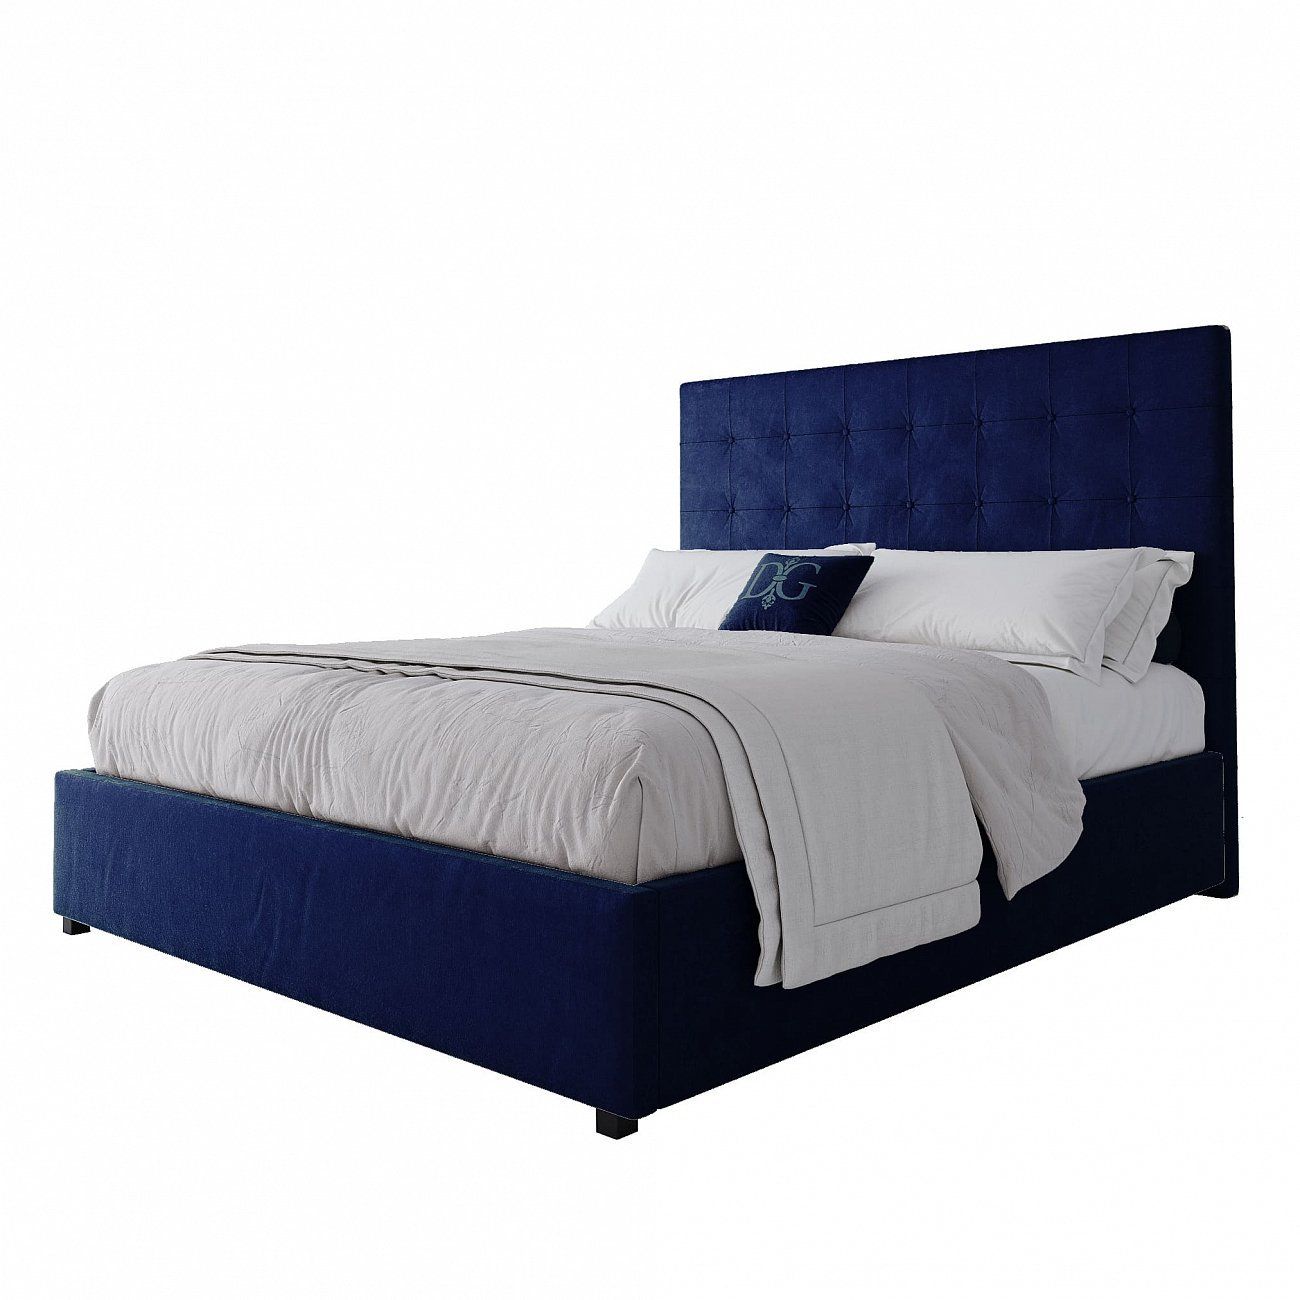 Double bed 160x200 blue Royal Black